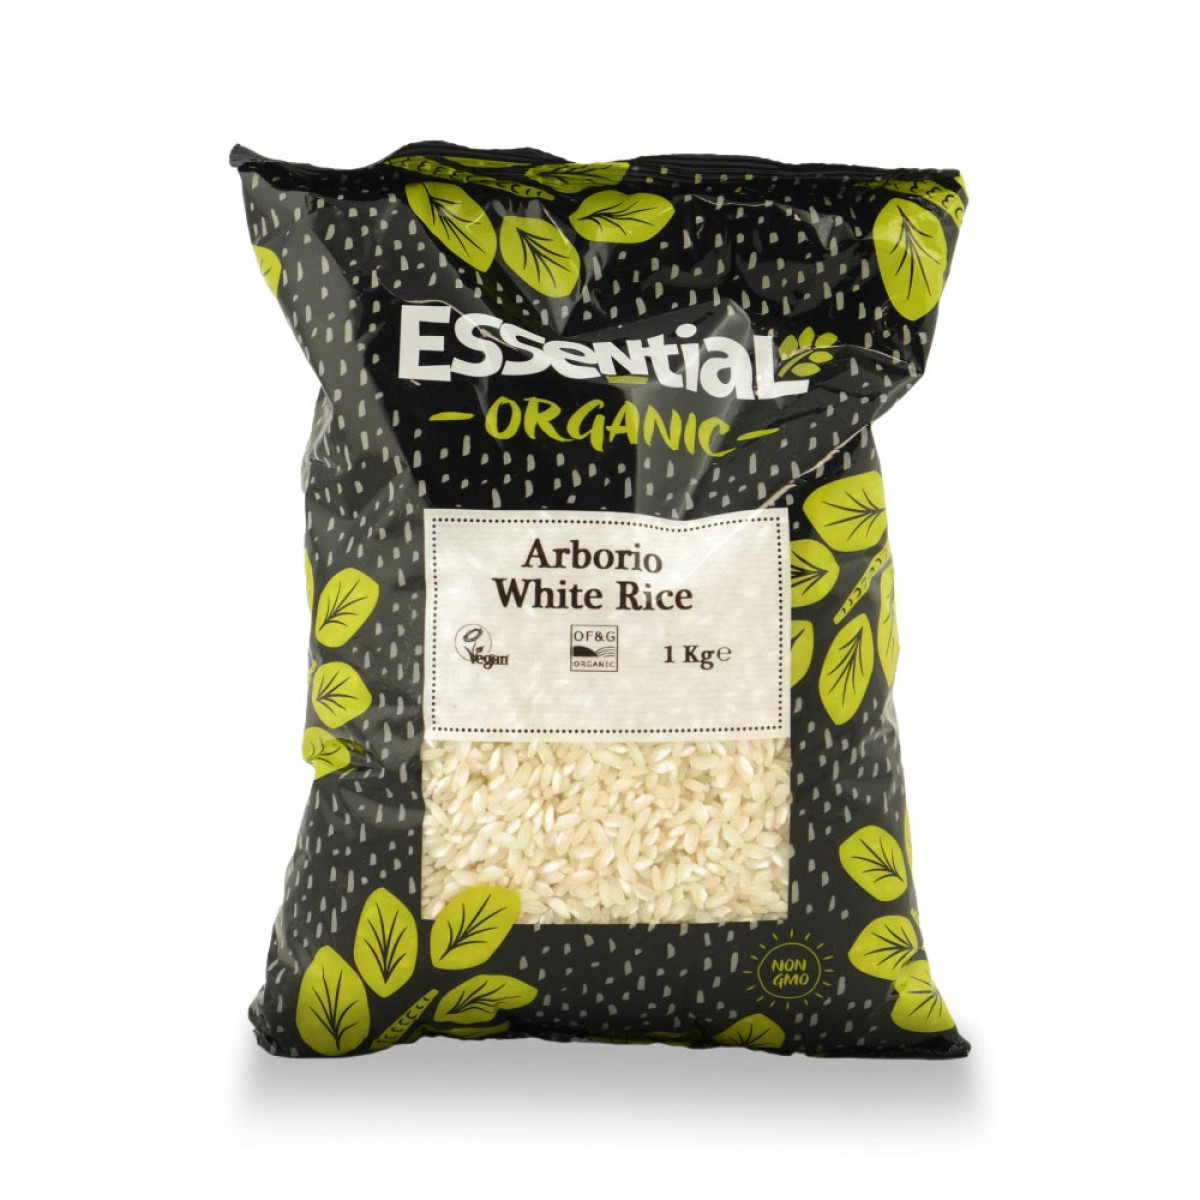 Product picture for Arborio White Rice